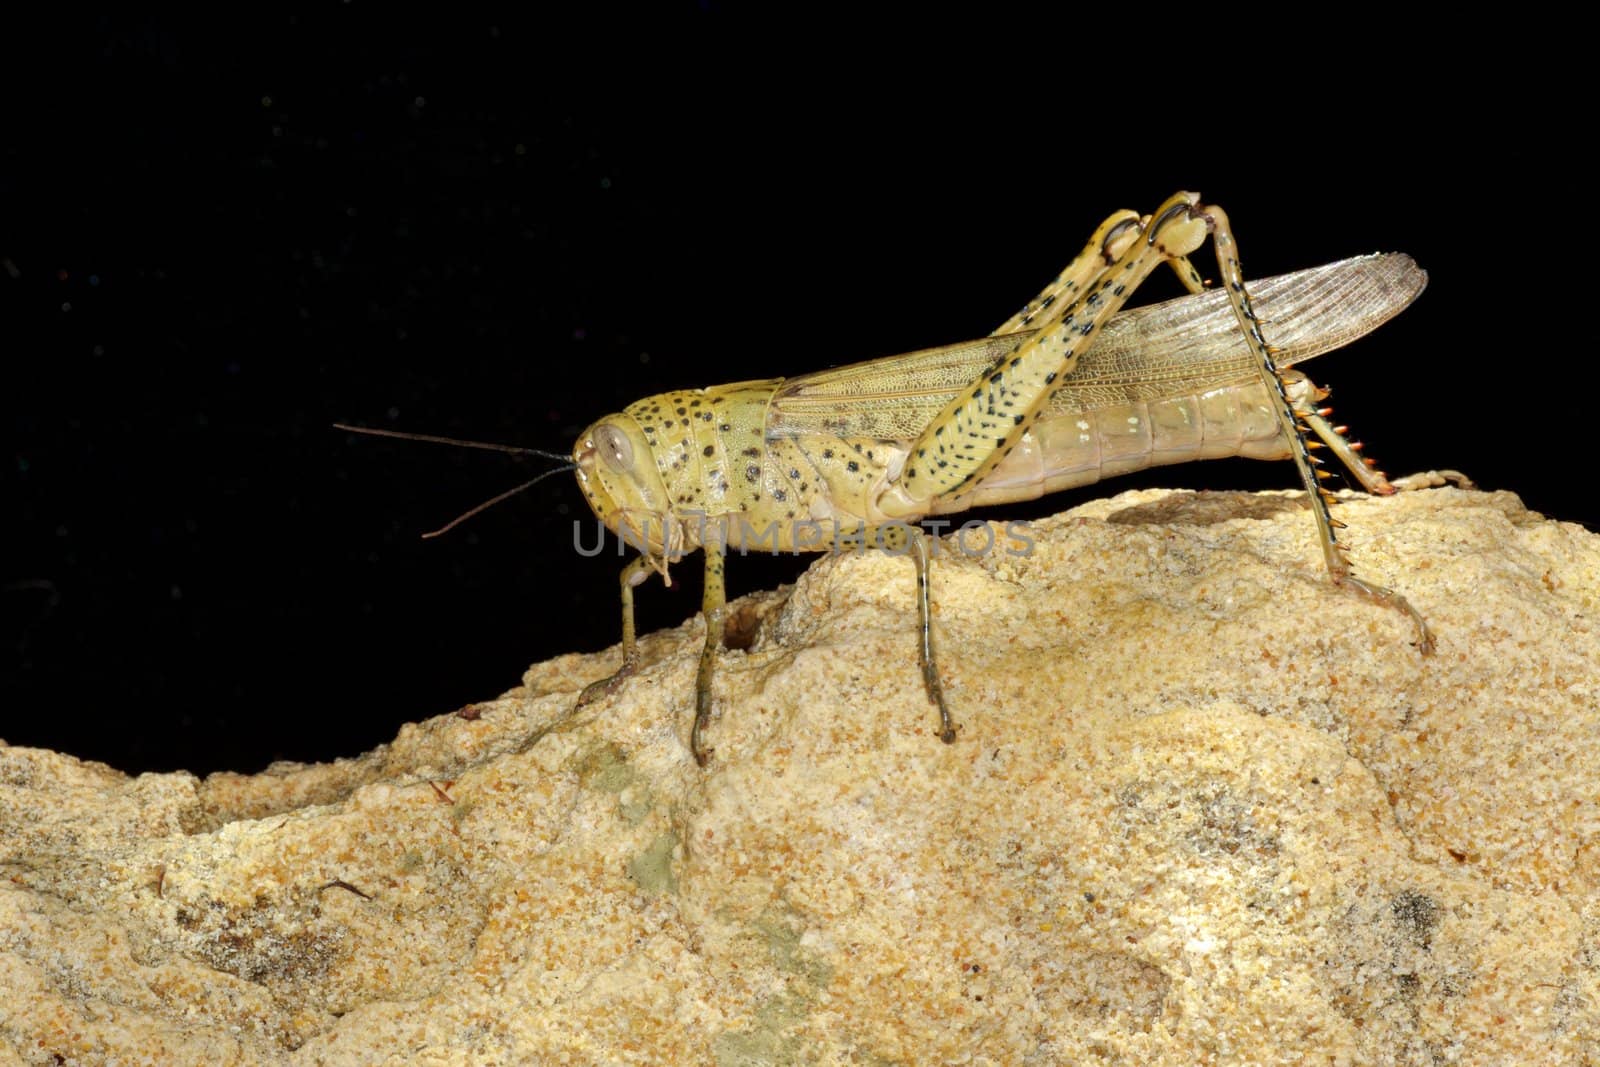 A locust resting on a sandstone rock, Western Australia.